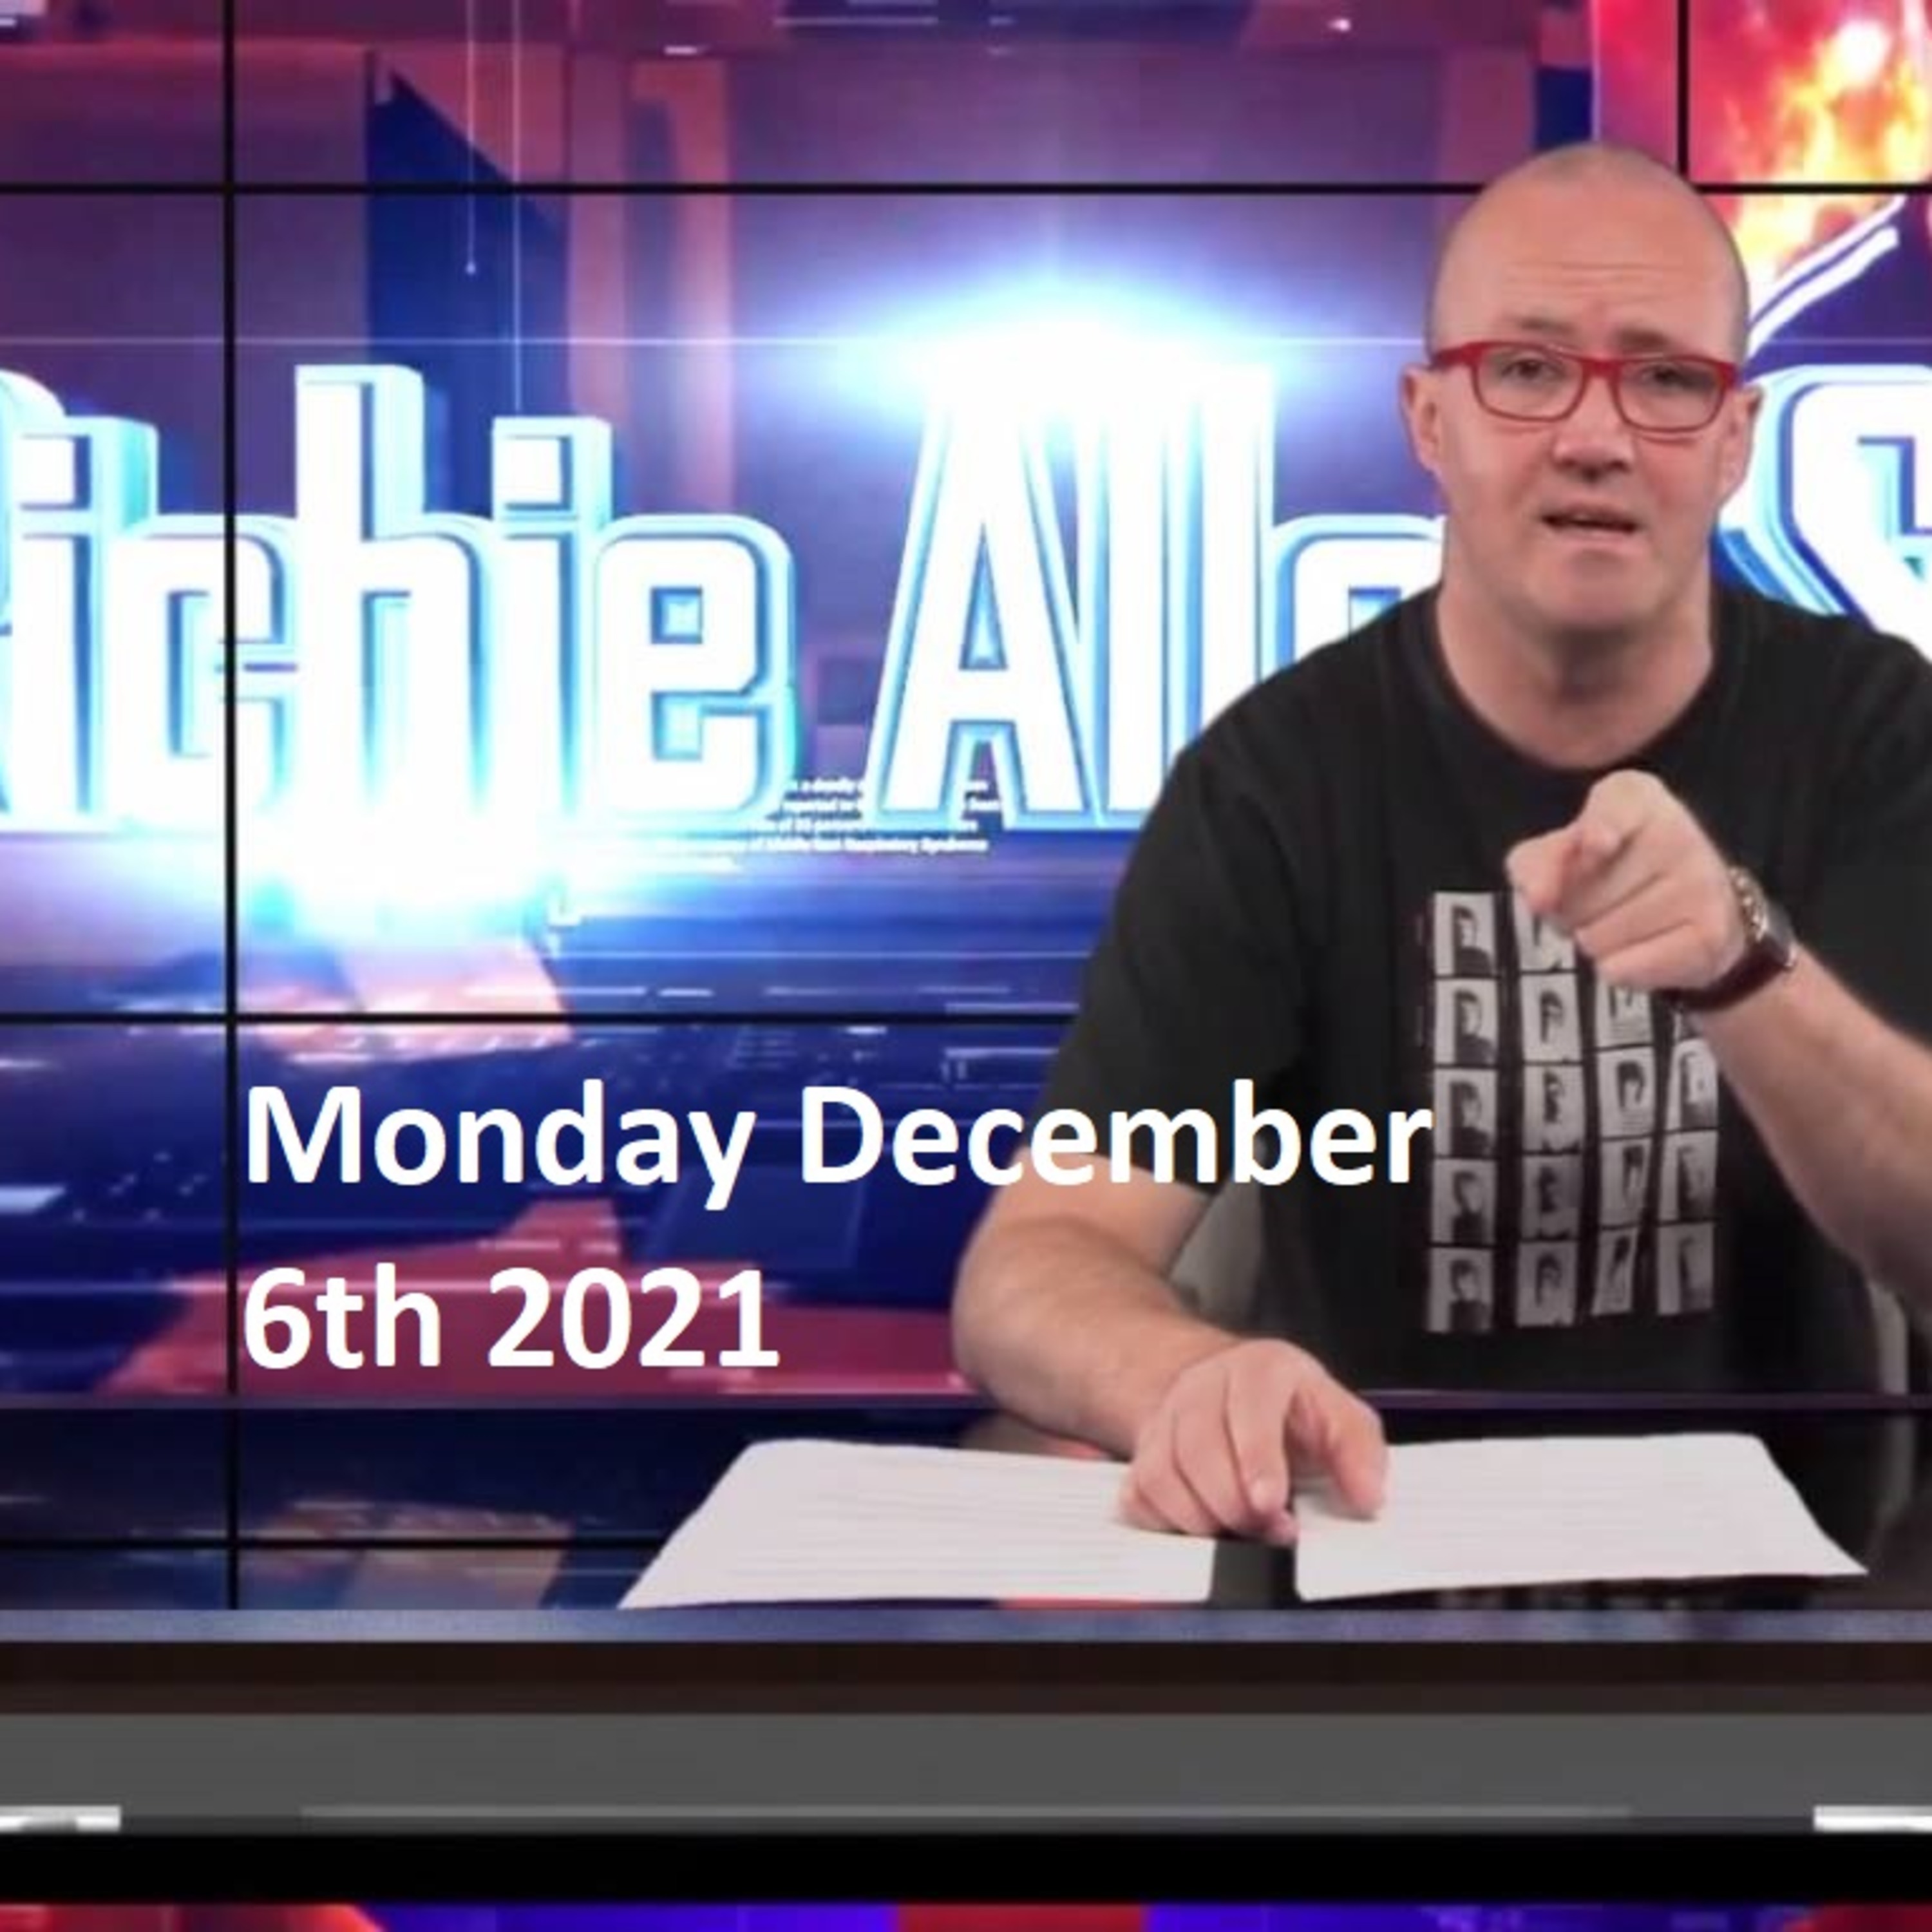 Episode 1376: The Richie Allen Show Monday December 6th 2021